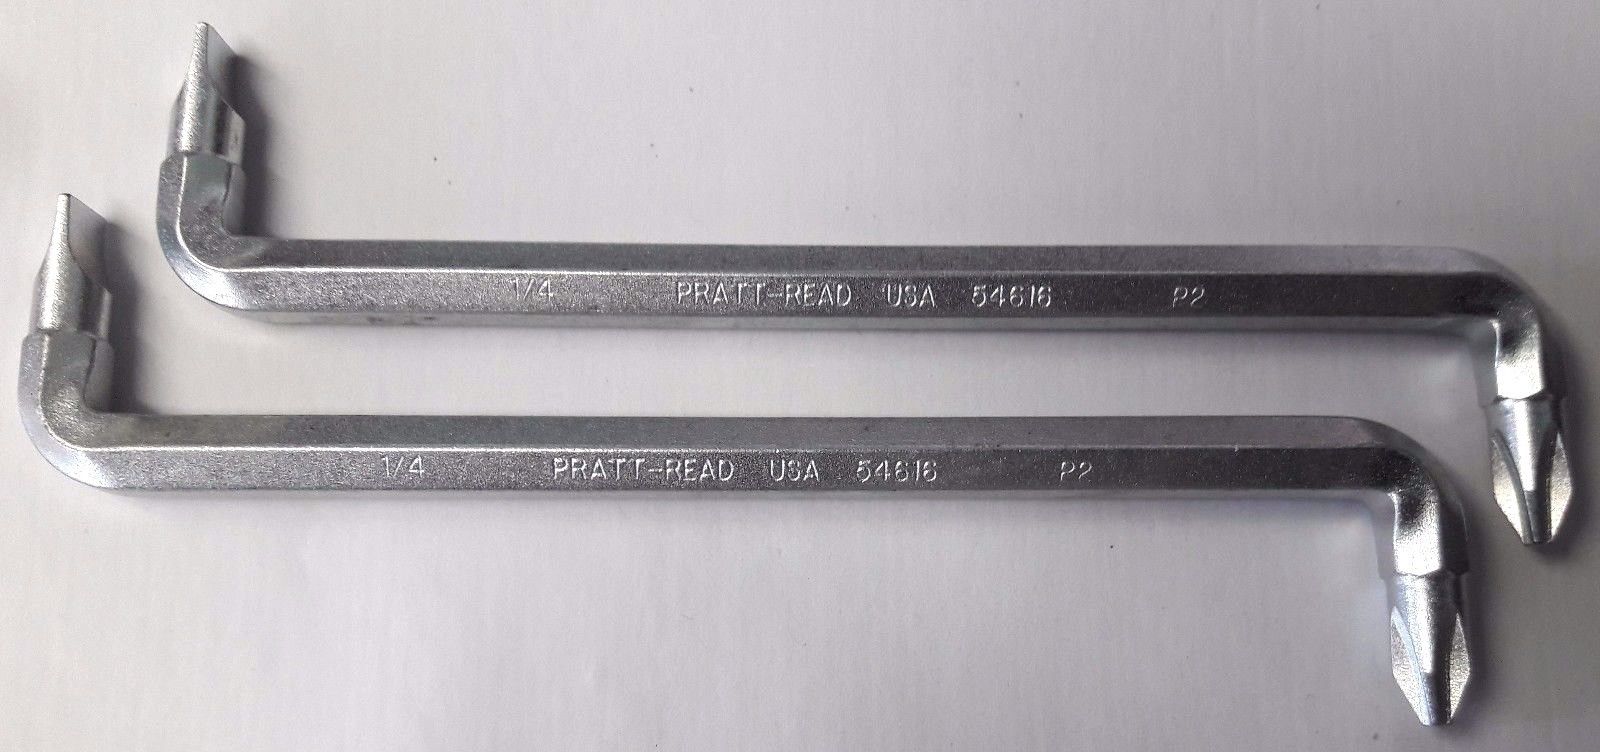 Pratt-Read 54616 Offset Phillips & Straight Bit P2 & 1/4 USA 2PCS